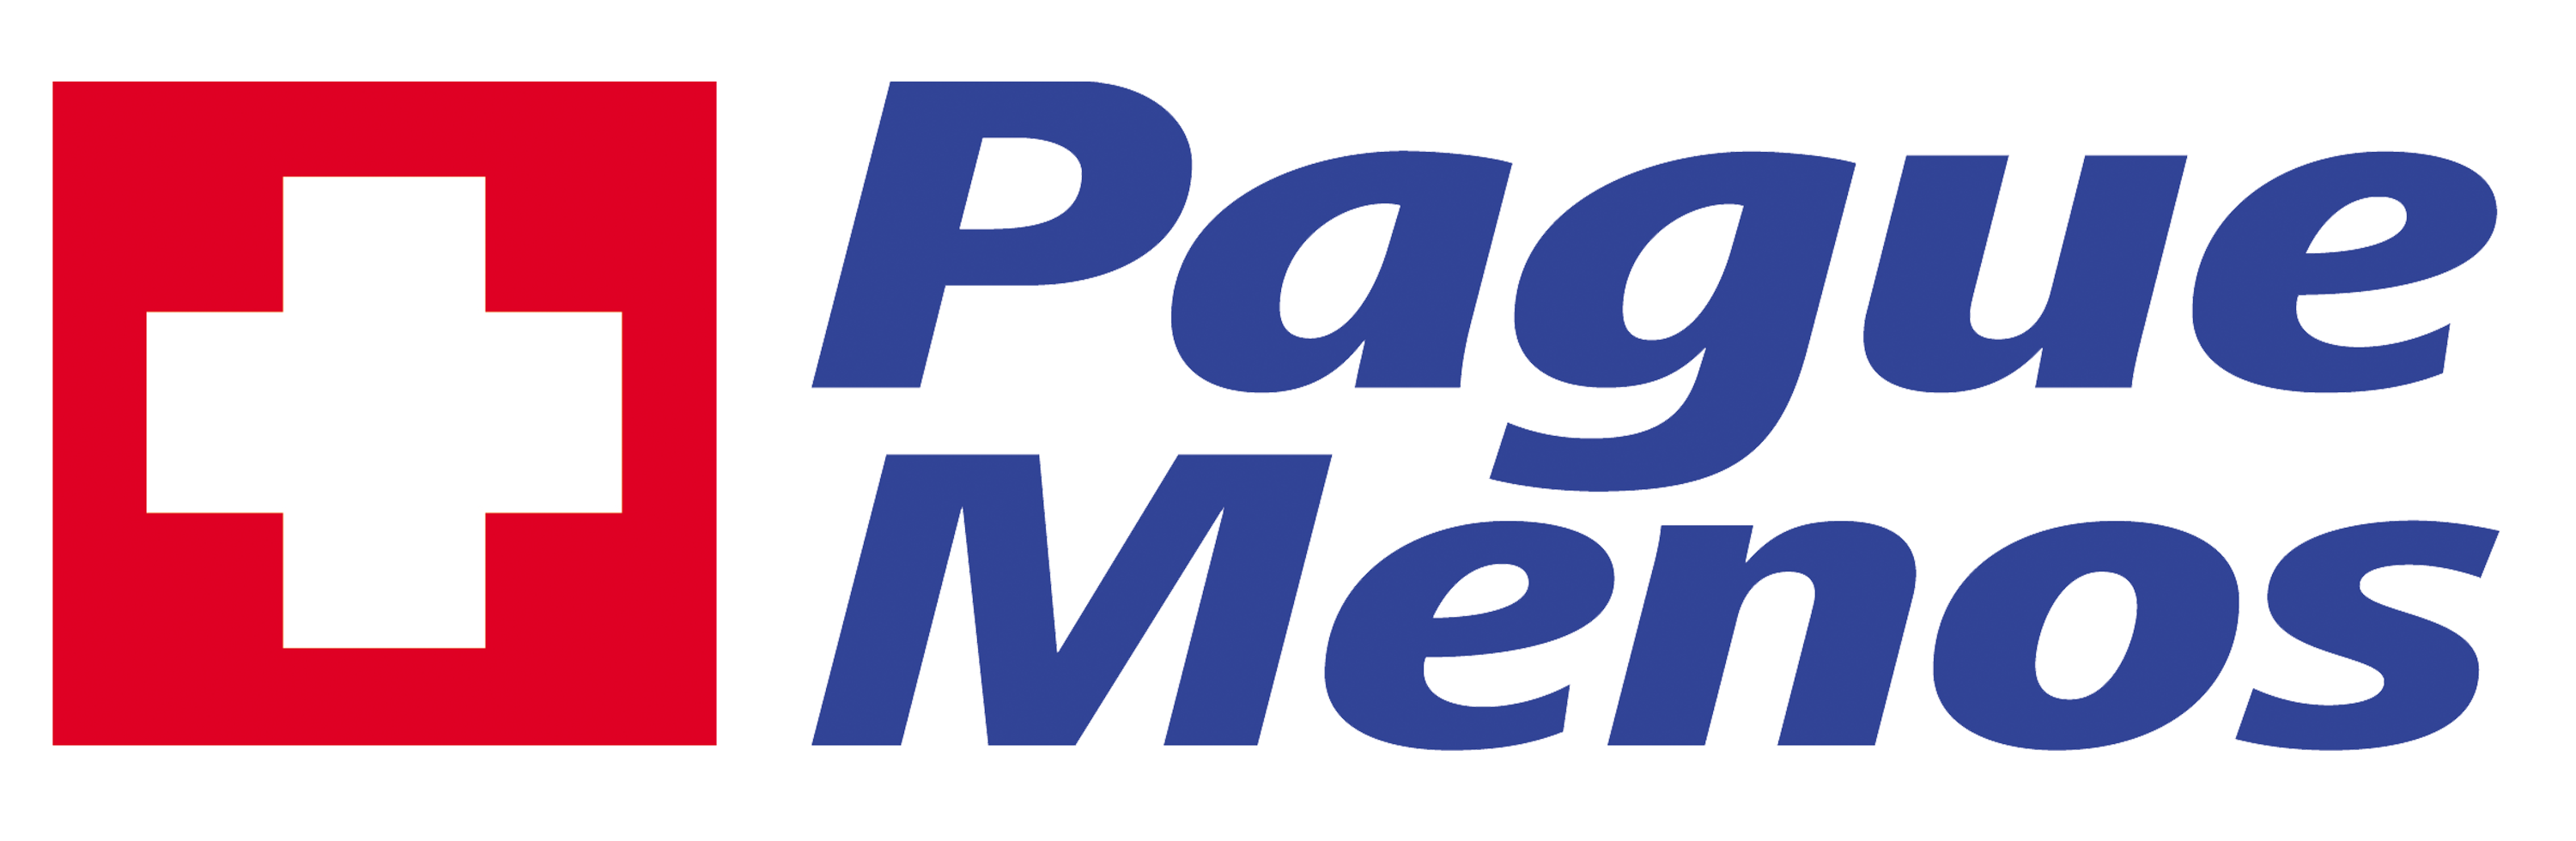 Farmacia Pague Menos - Belém - PA